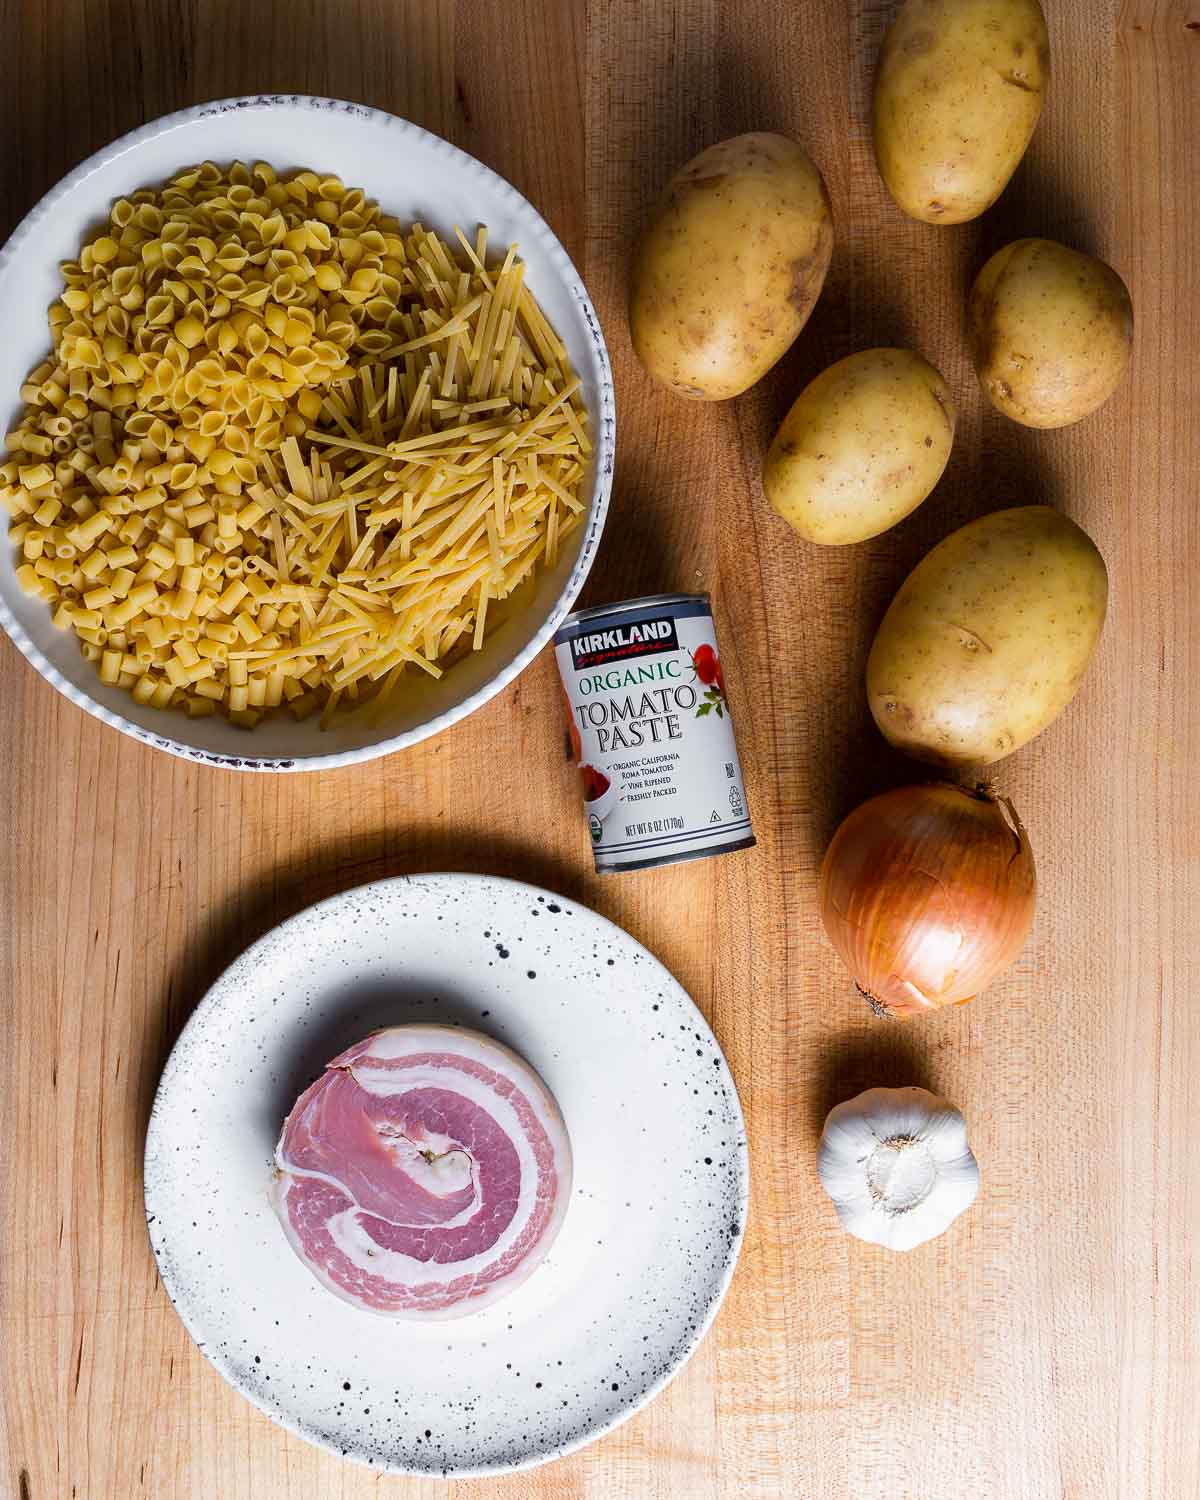 Ingredients shown: mixed pasta in bowl, potatoes, tomato pasta, pancetta, onion, and garlic.